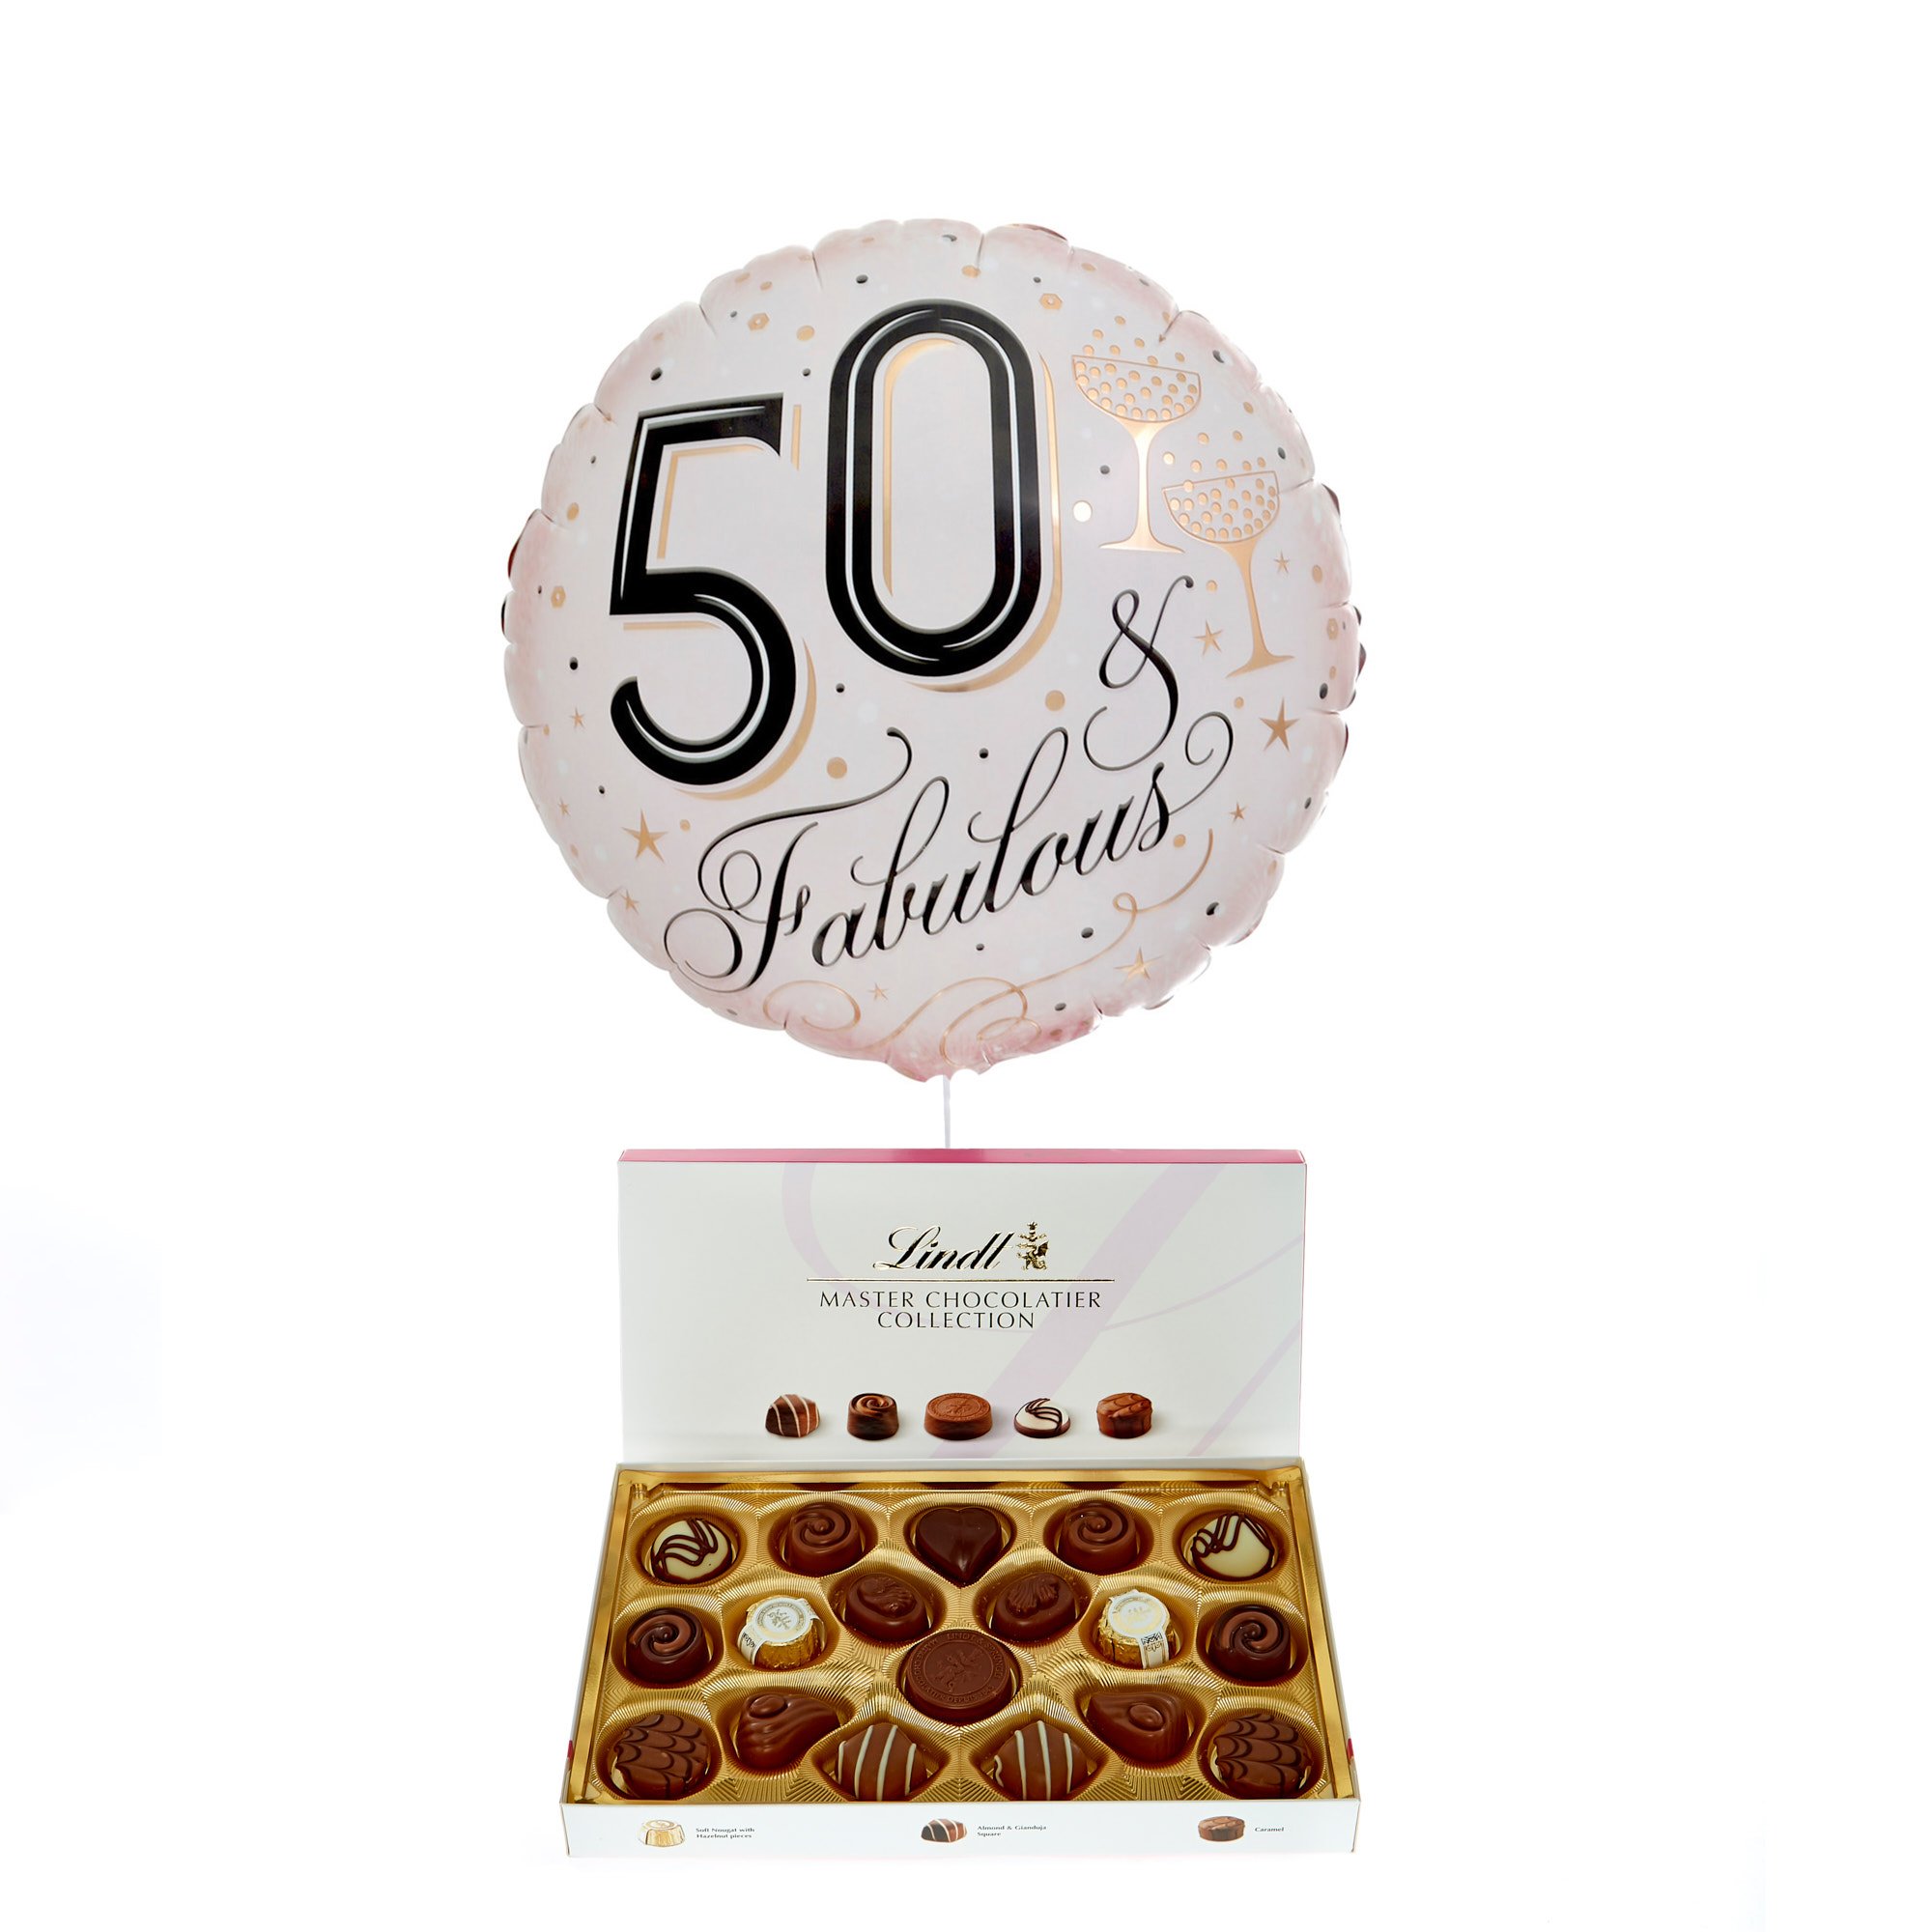 Fabulous 50th Birthday Balloon & Lindt Chocolates - FREE GIFT CARD!